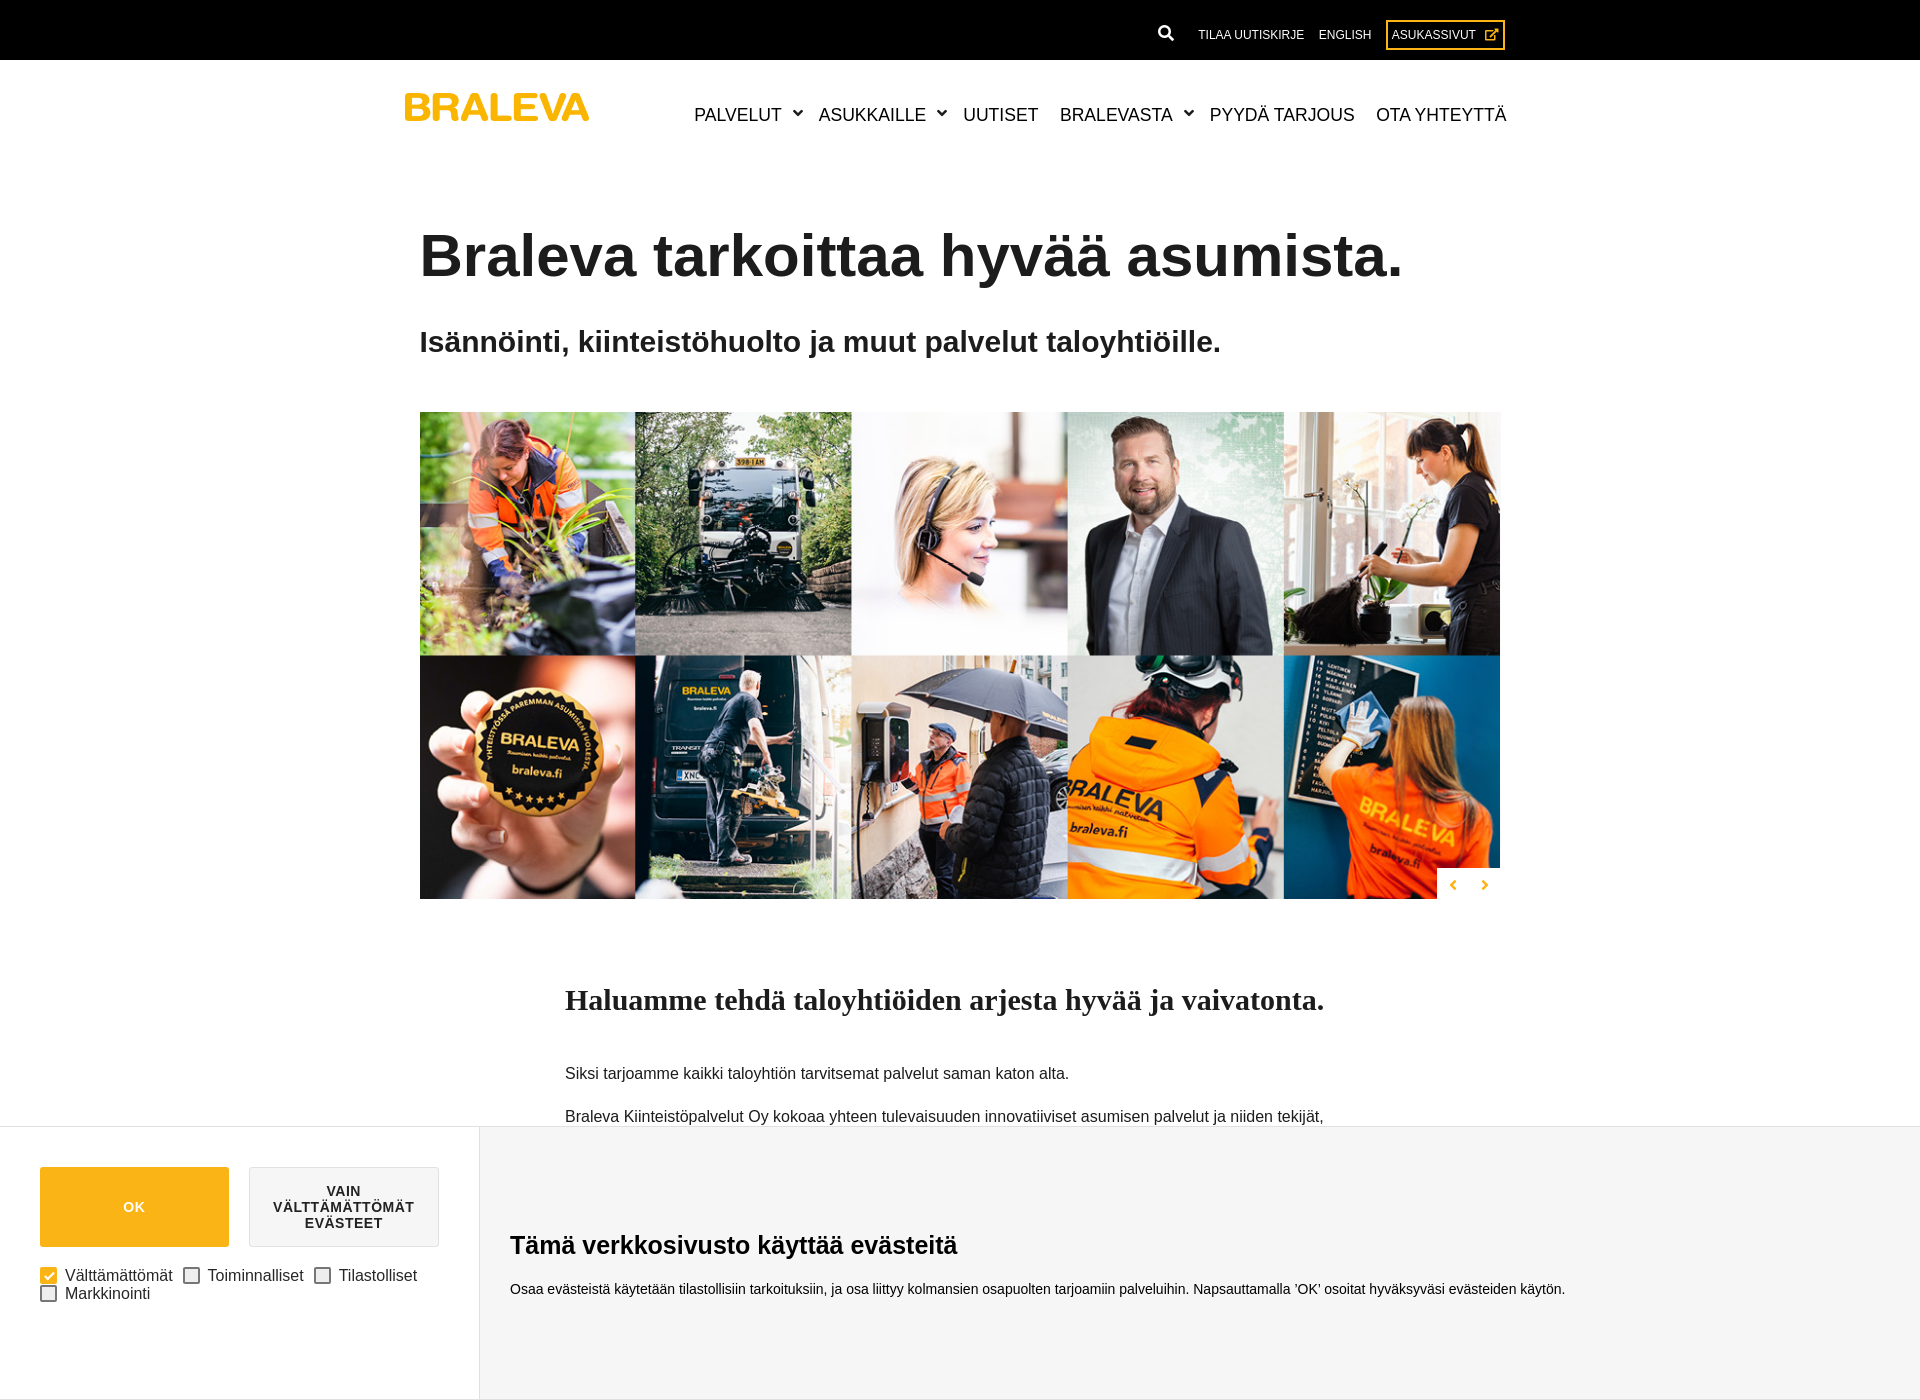 Näyttökuva siljanderoy.fi